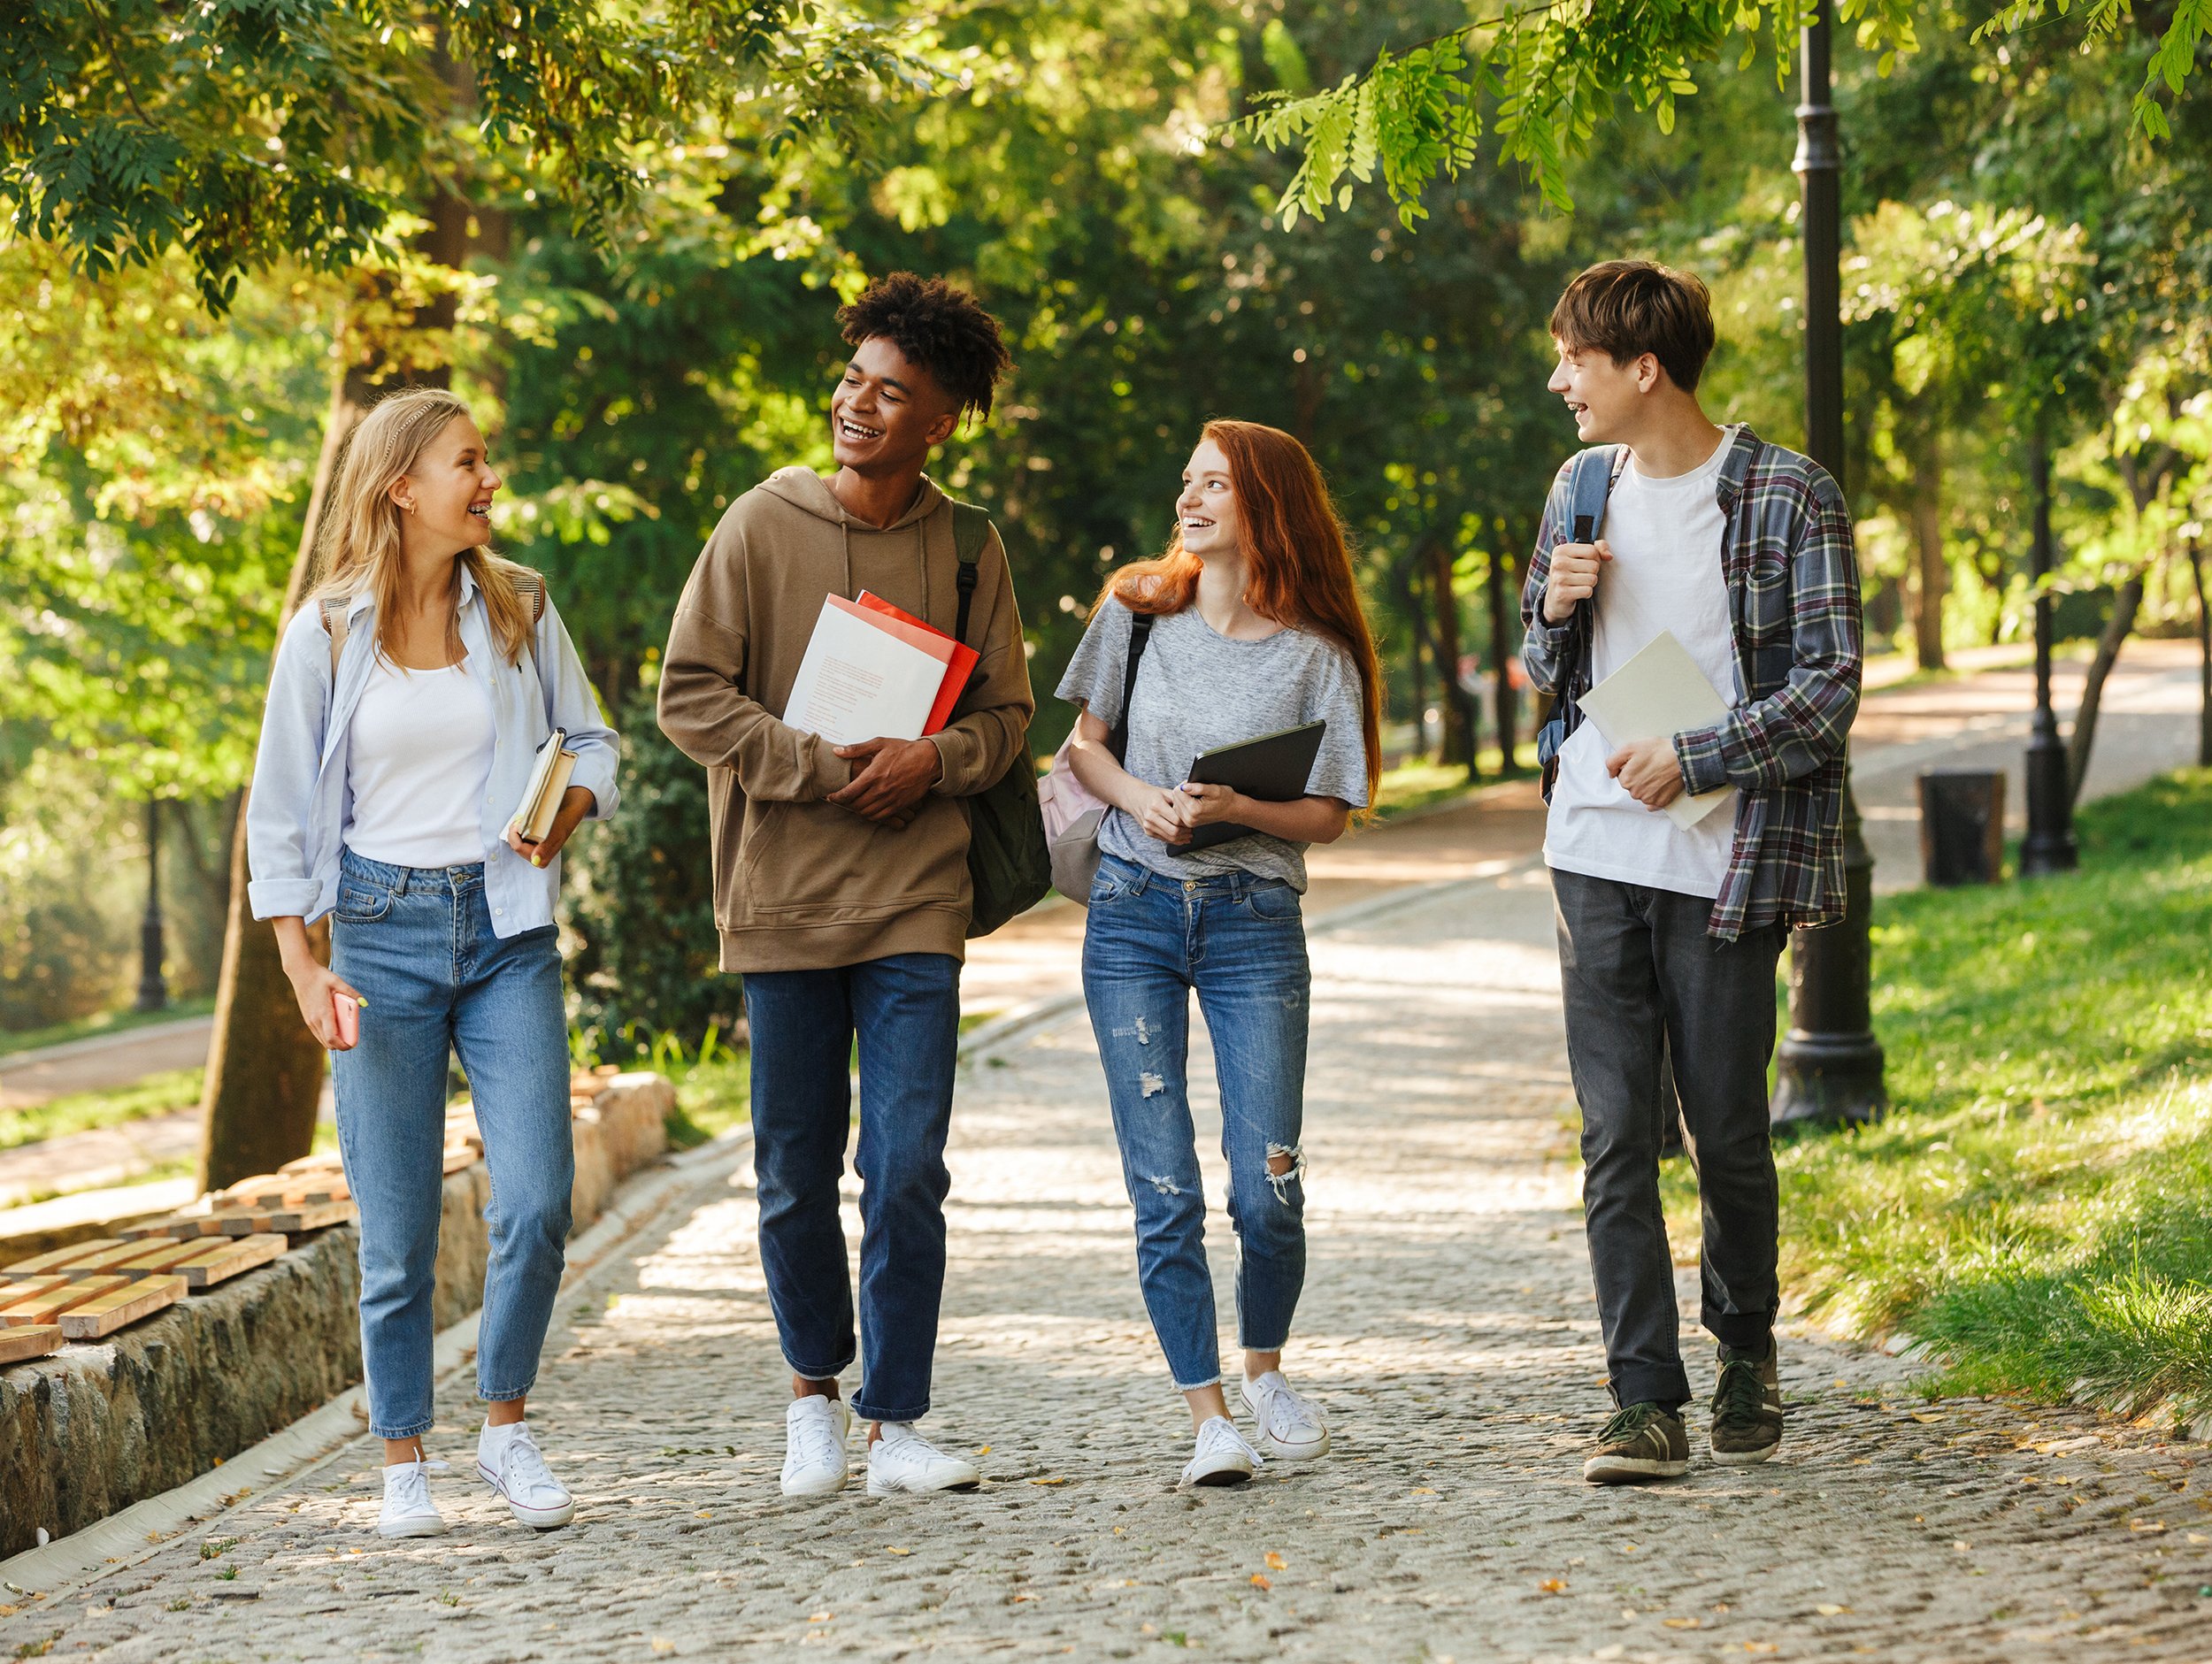 College students walking on cobblestone path